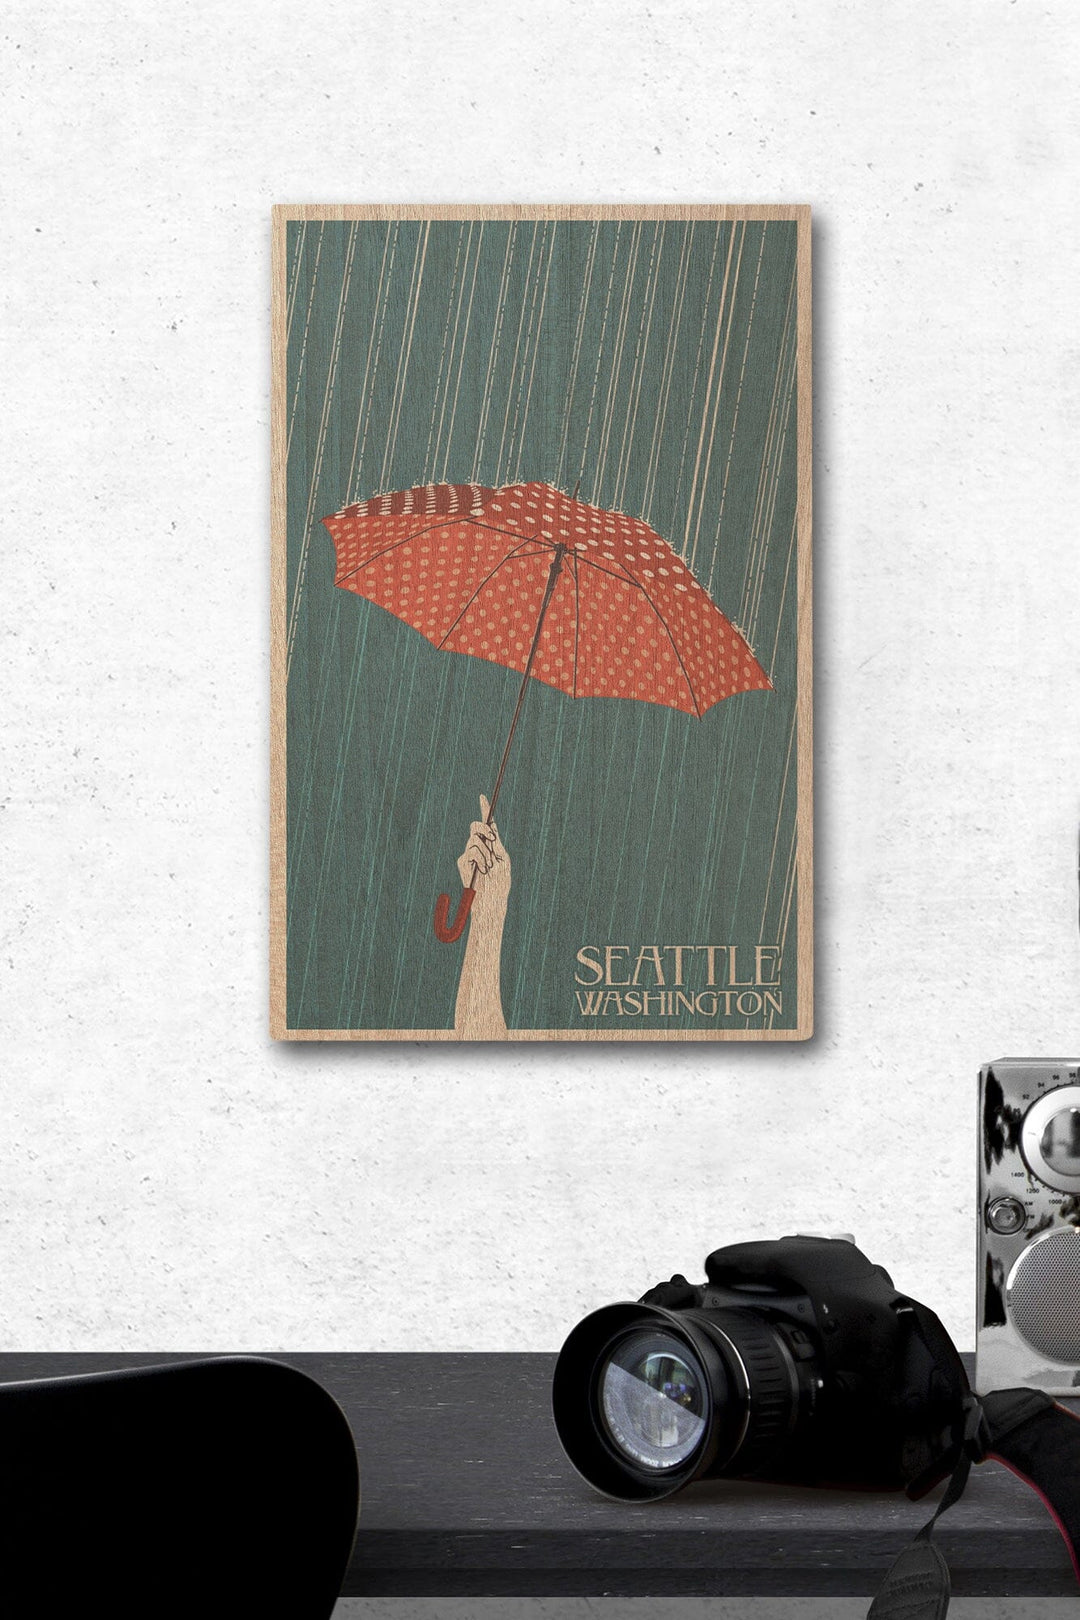 Seattle, Washington, Umbrella Letterpress, Lantern Press Artwork, Wood Signs and Postcards Wood Lantern Press 12 x 18 Wood Gallery Print 